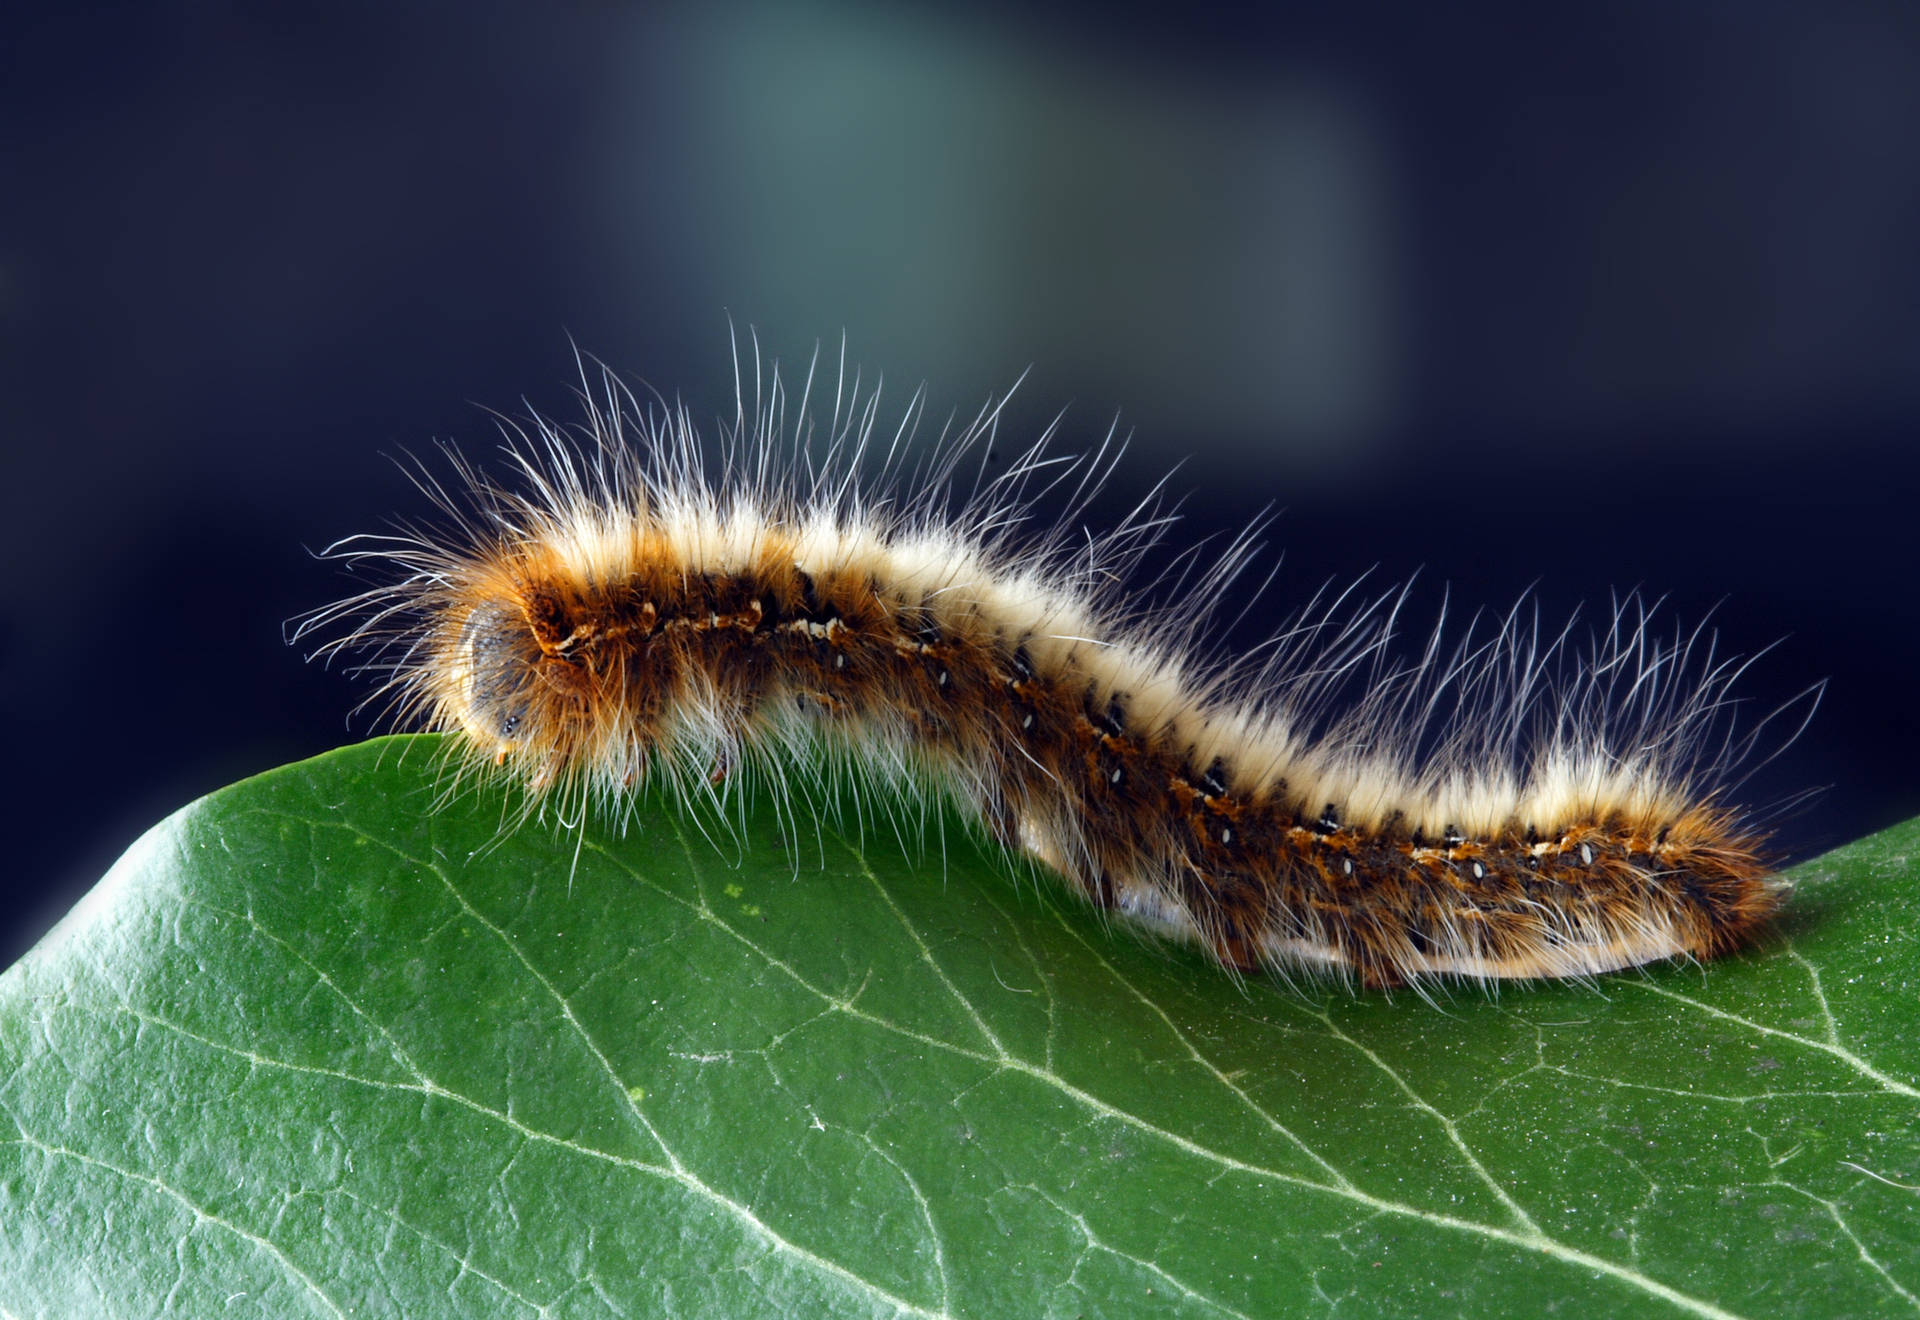 Hairy Caterpillar Like A Worm Wallpaper